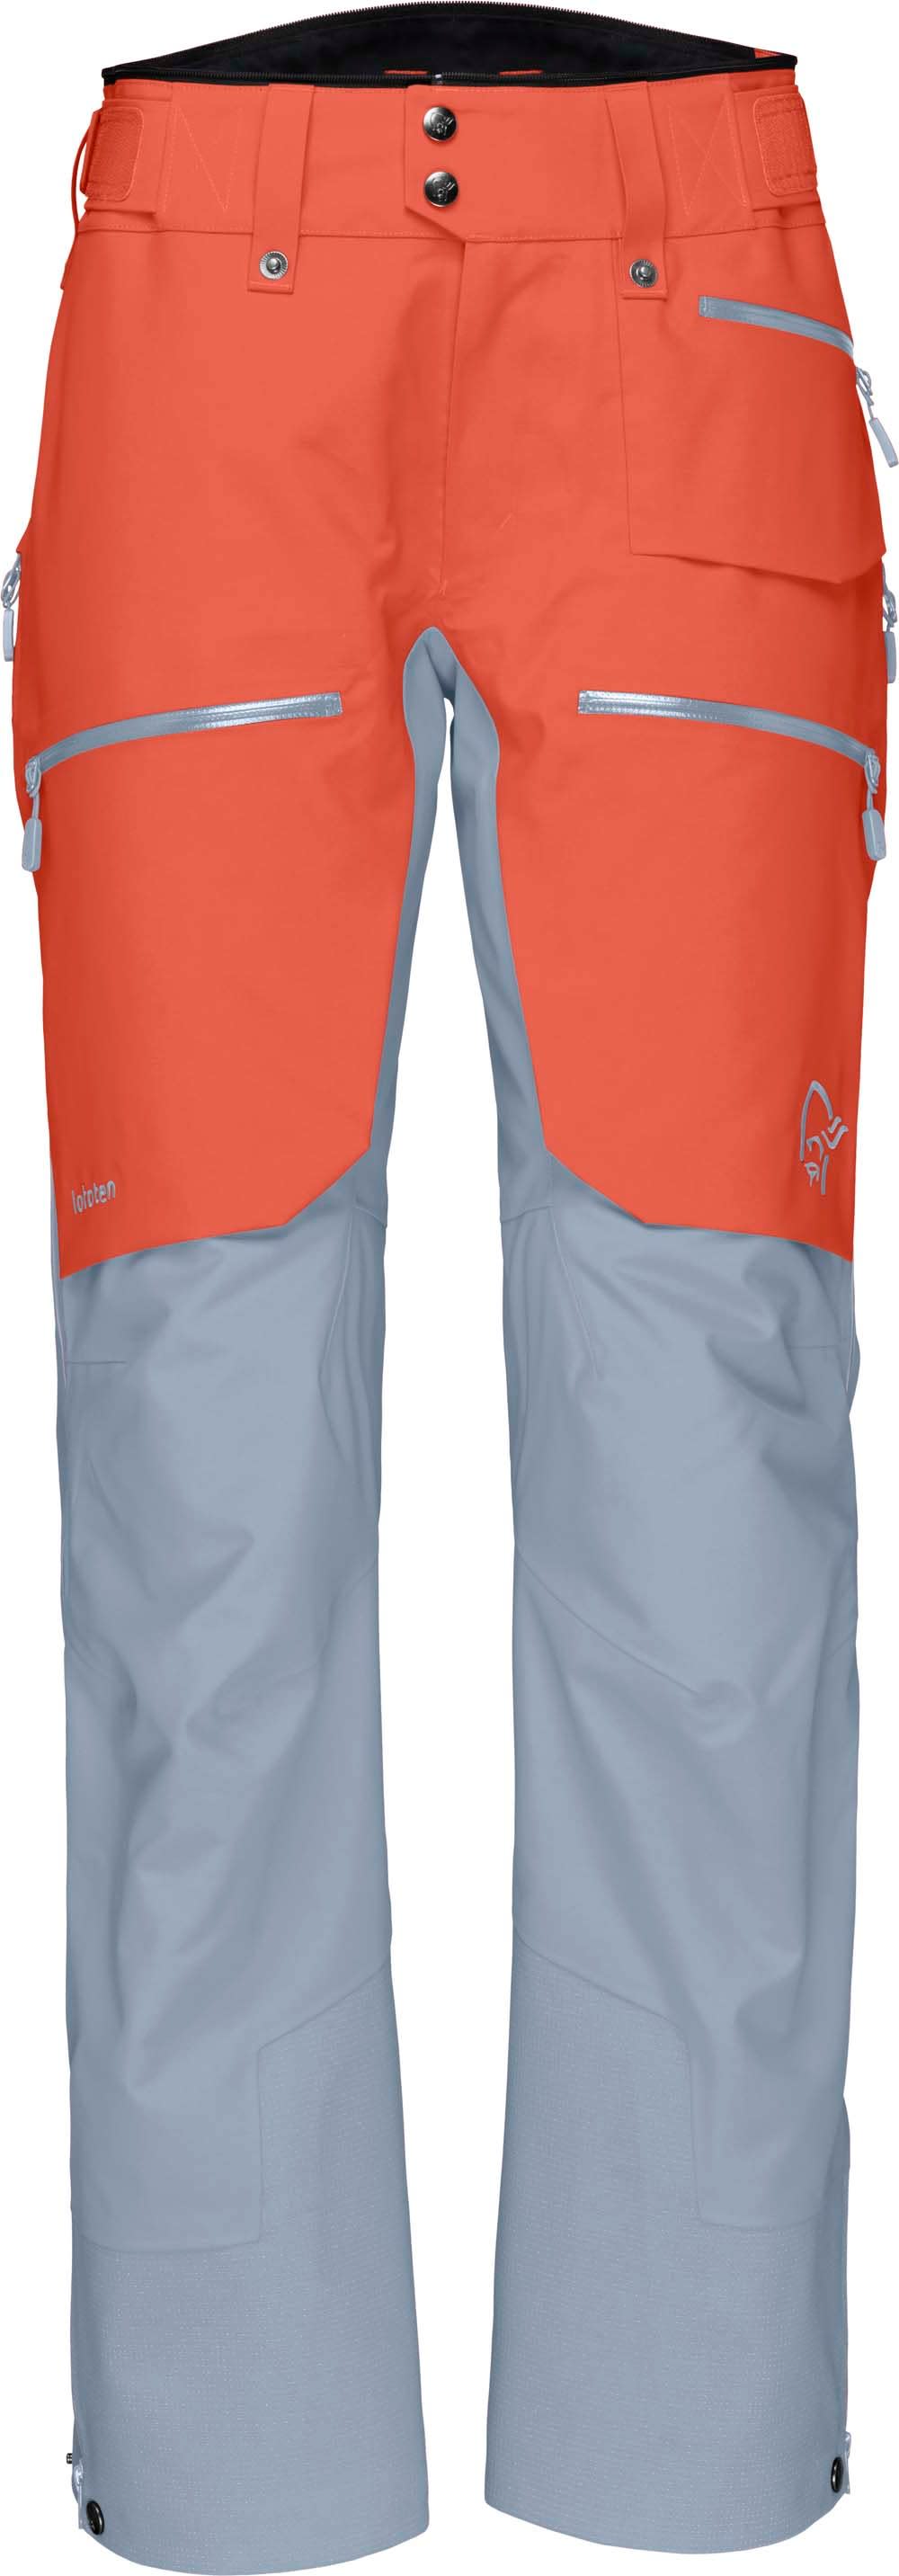 Women’s Lofoten GORE-TEX Pro Pants Orange Alert/Blue Fog